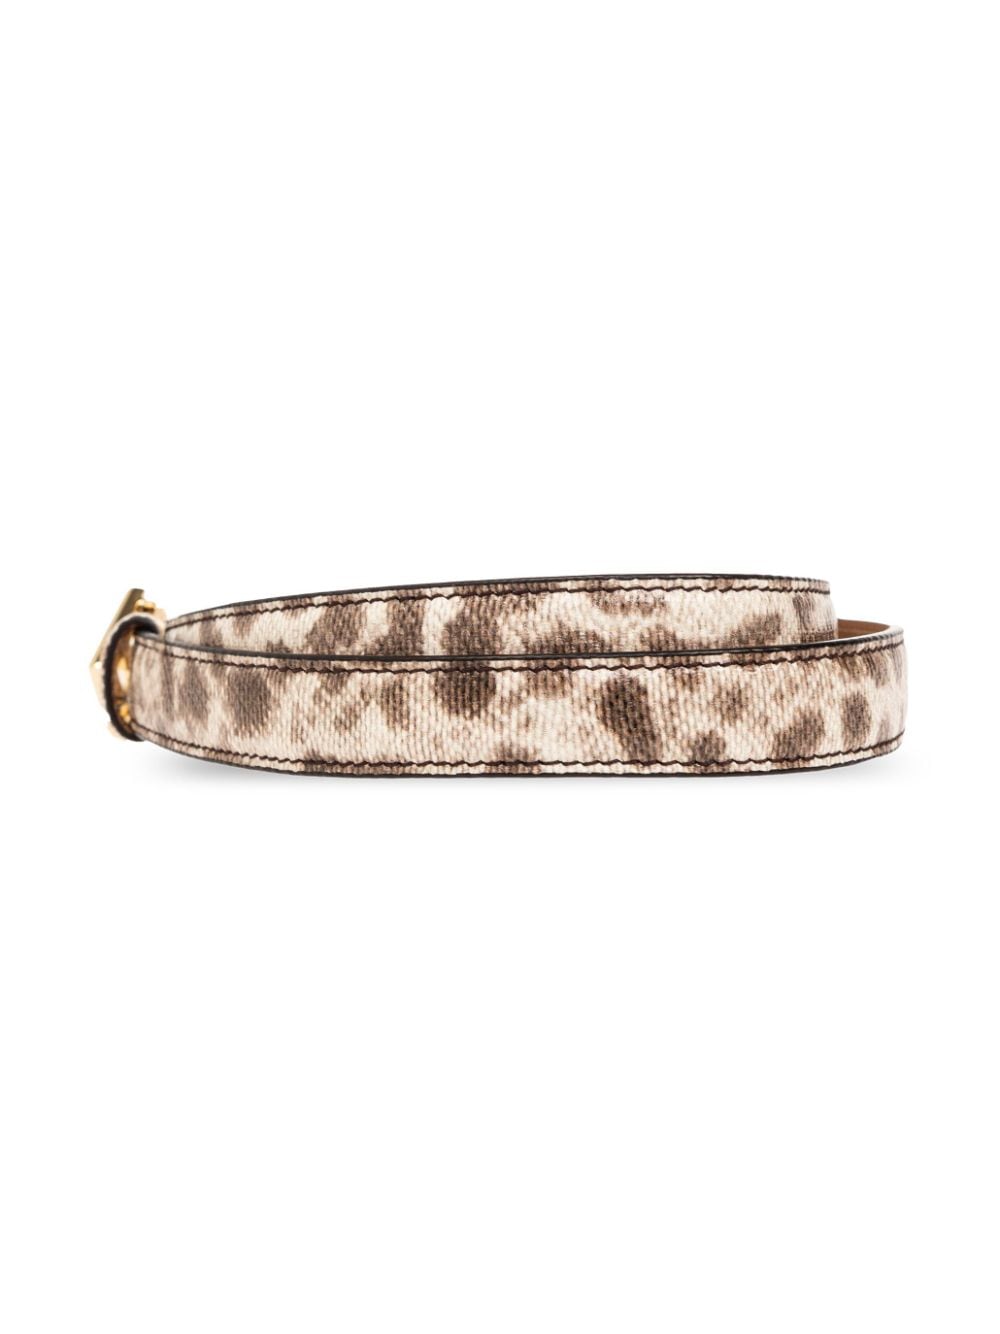 FENDI reversible snake-effect leather belt - Beige